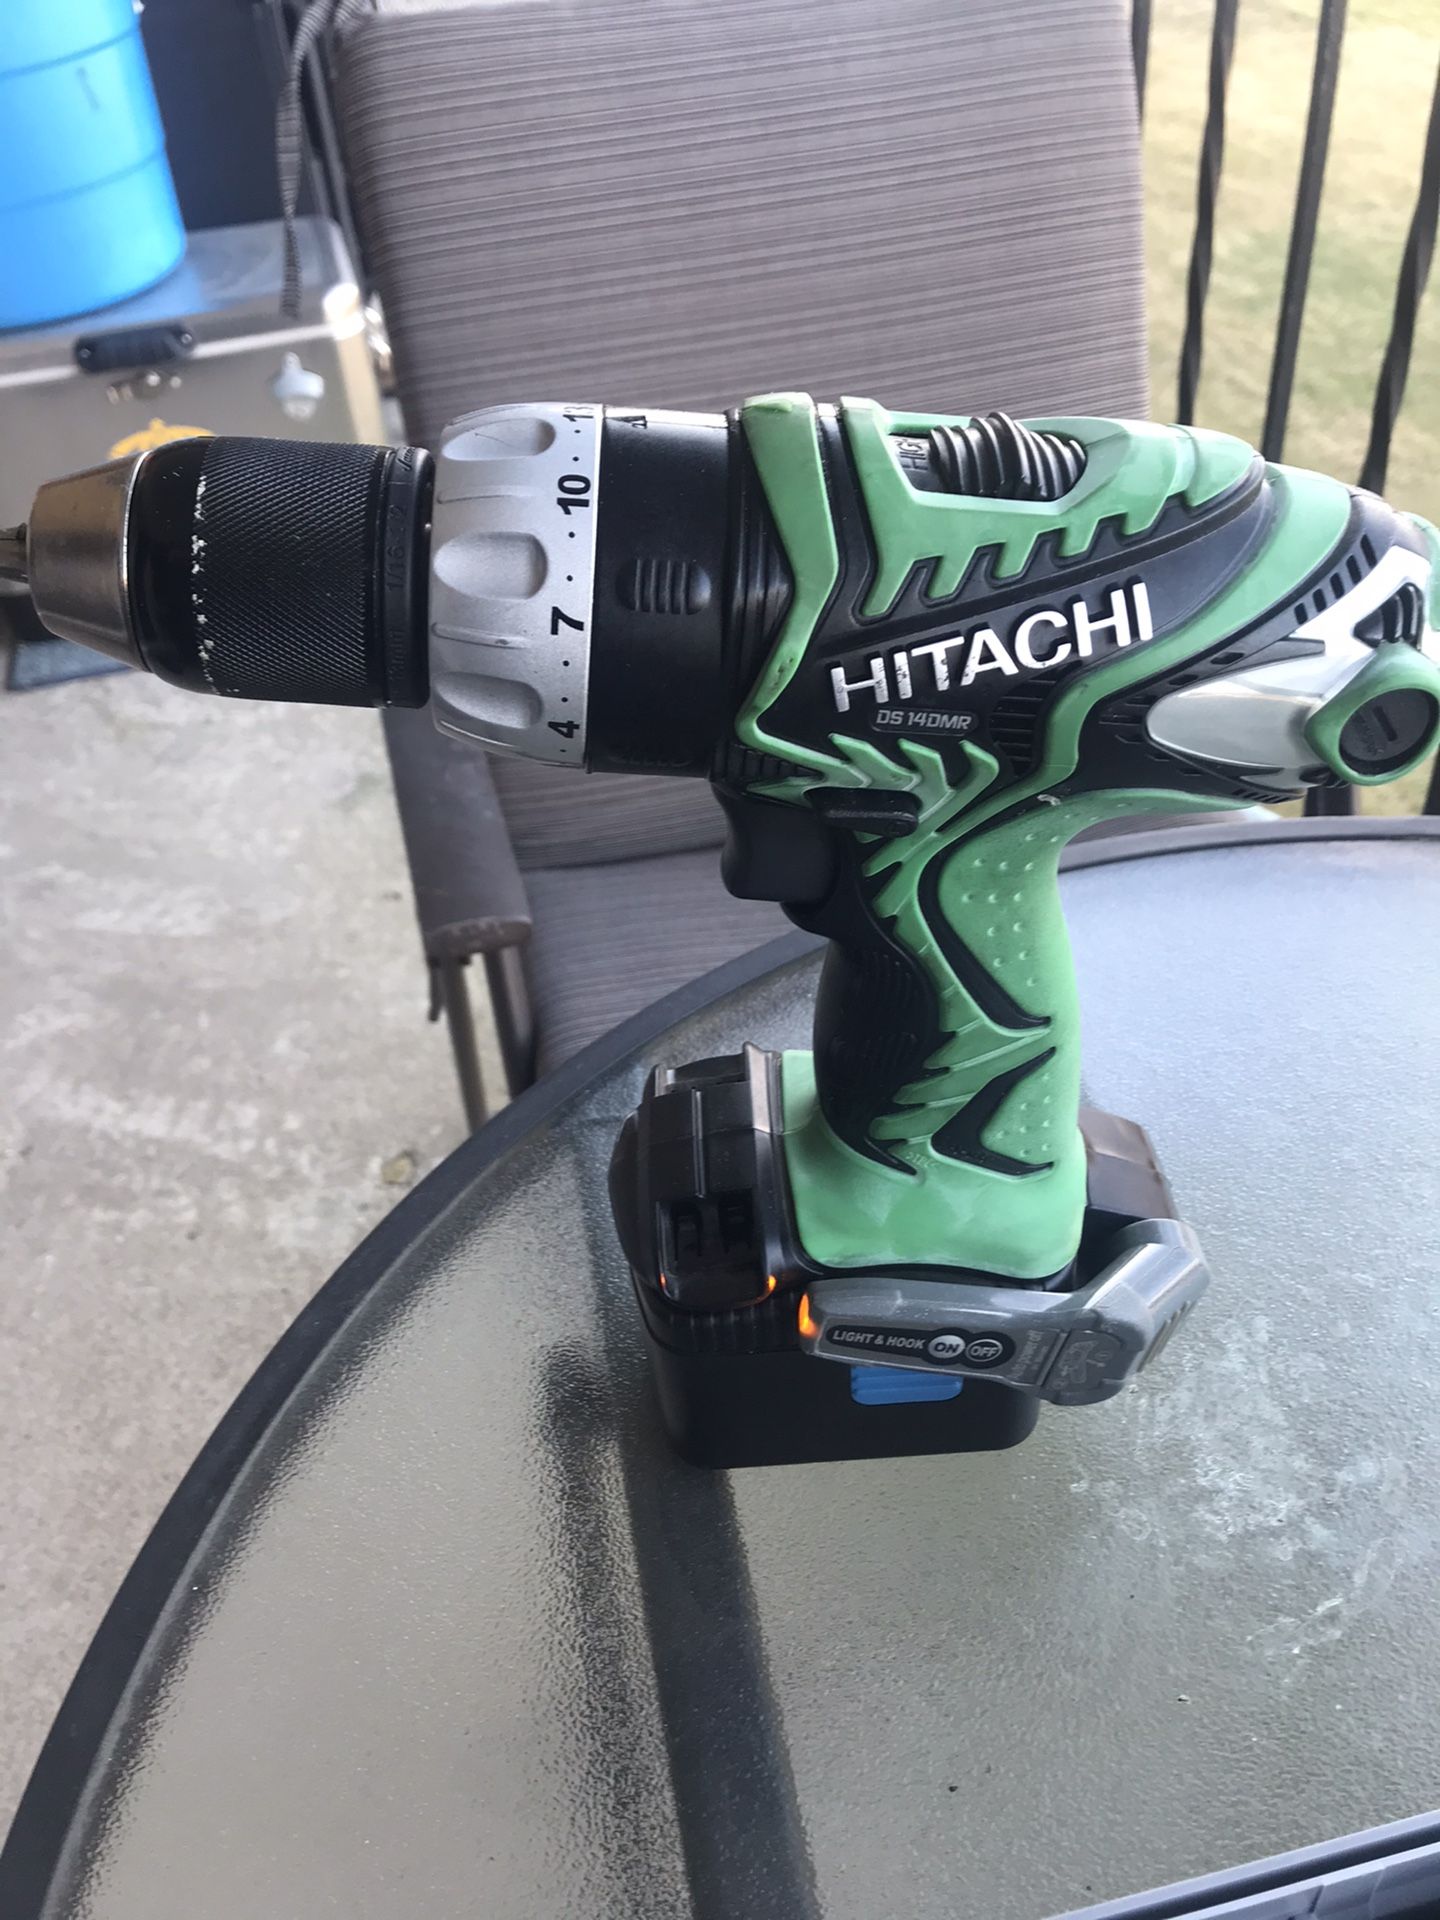 Hitachi 14.4 volt hammer drill like new $65.